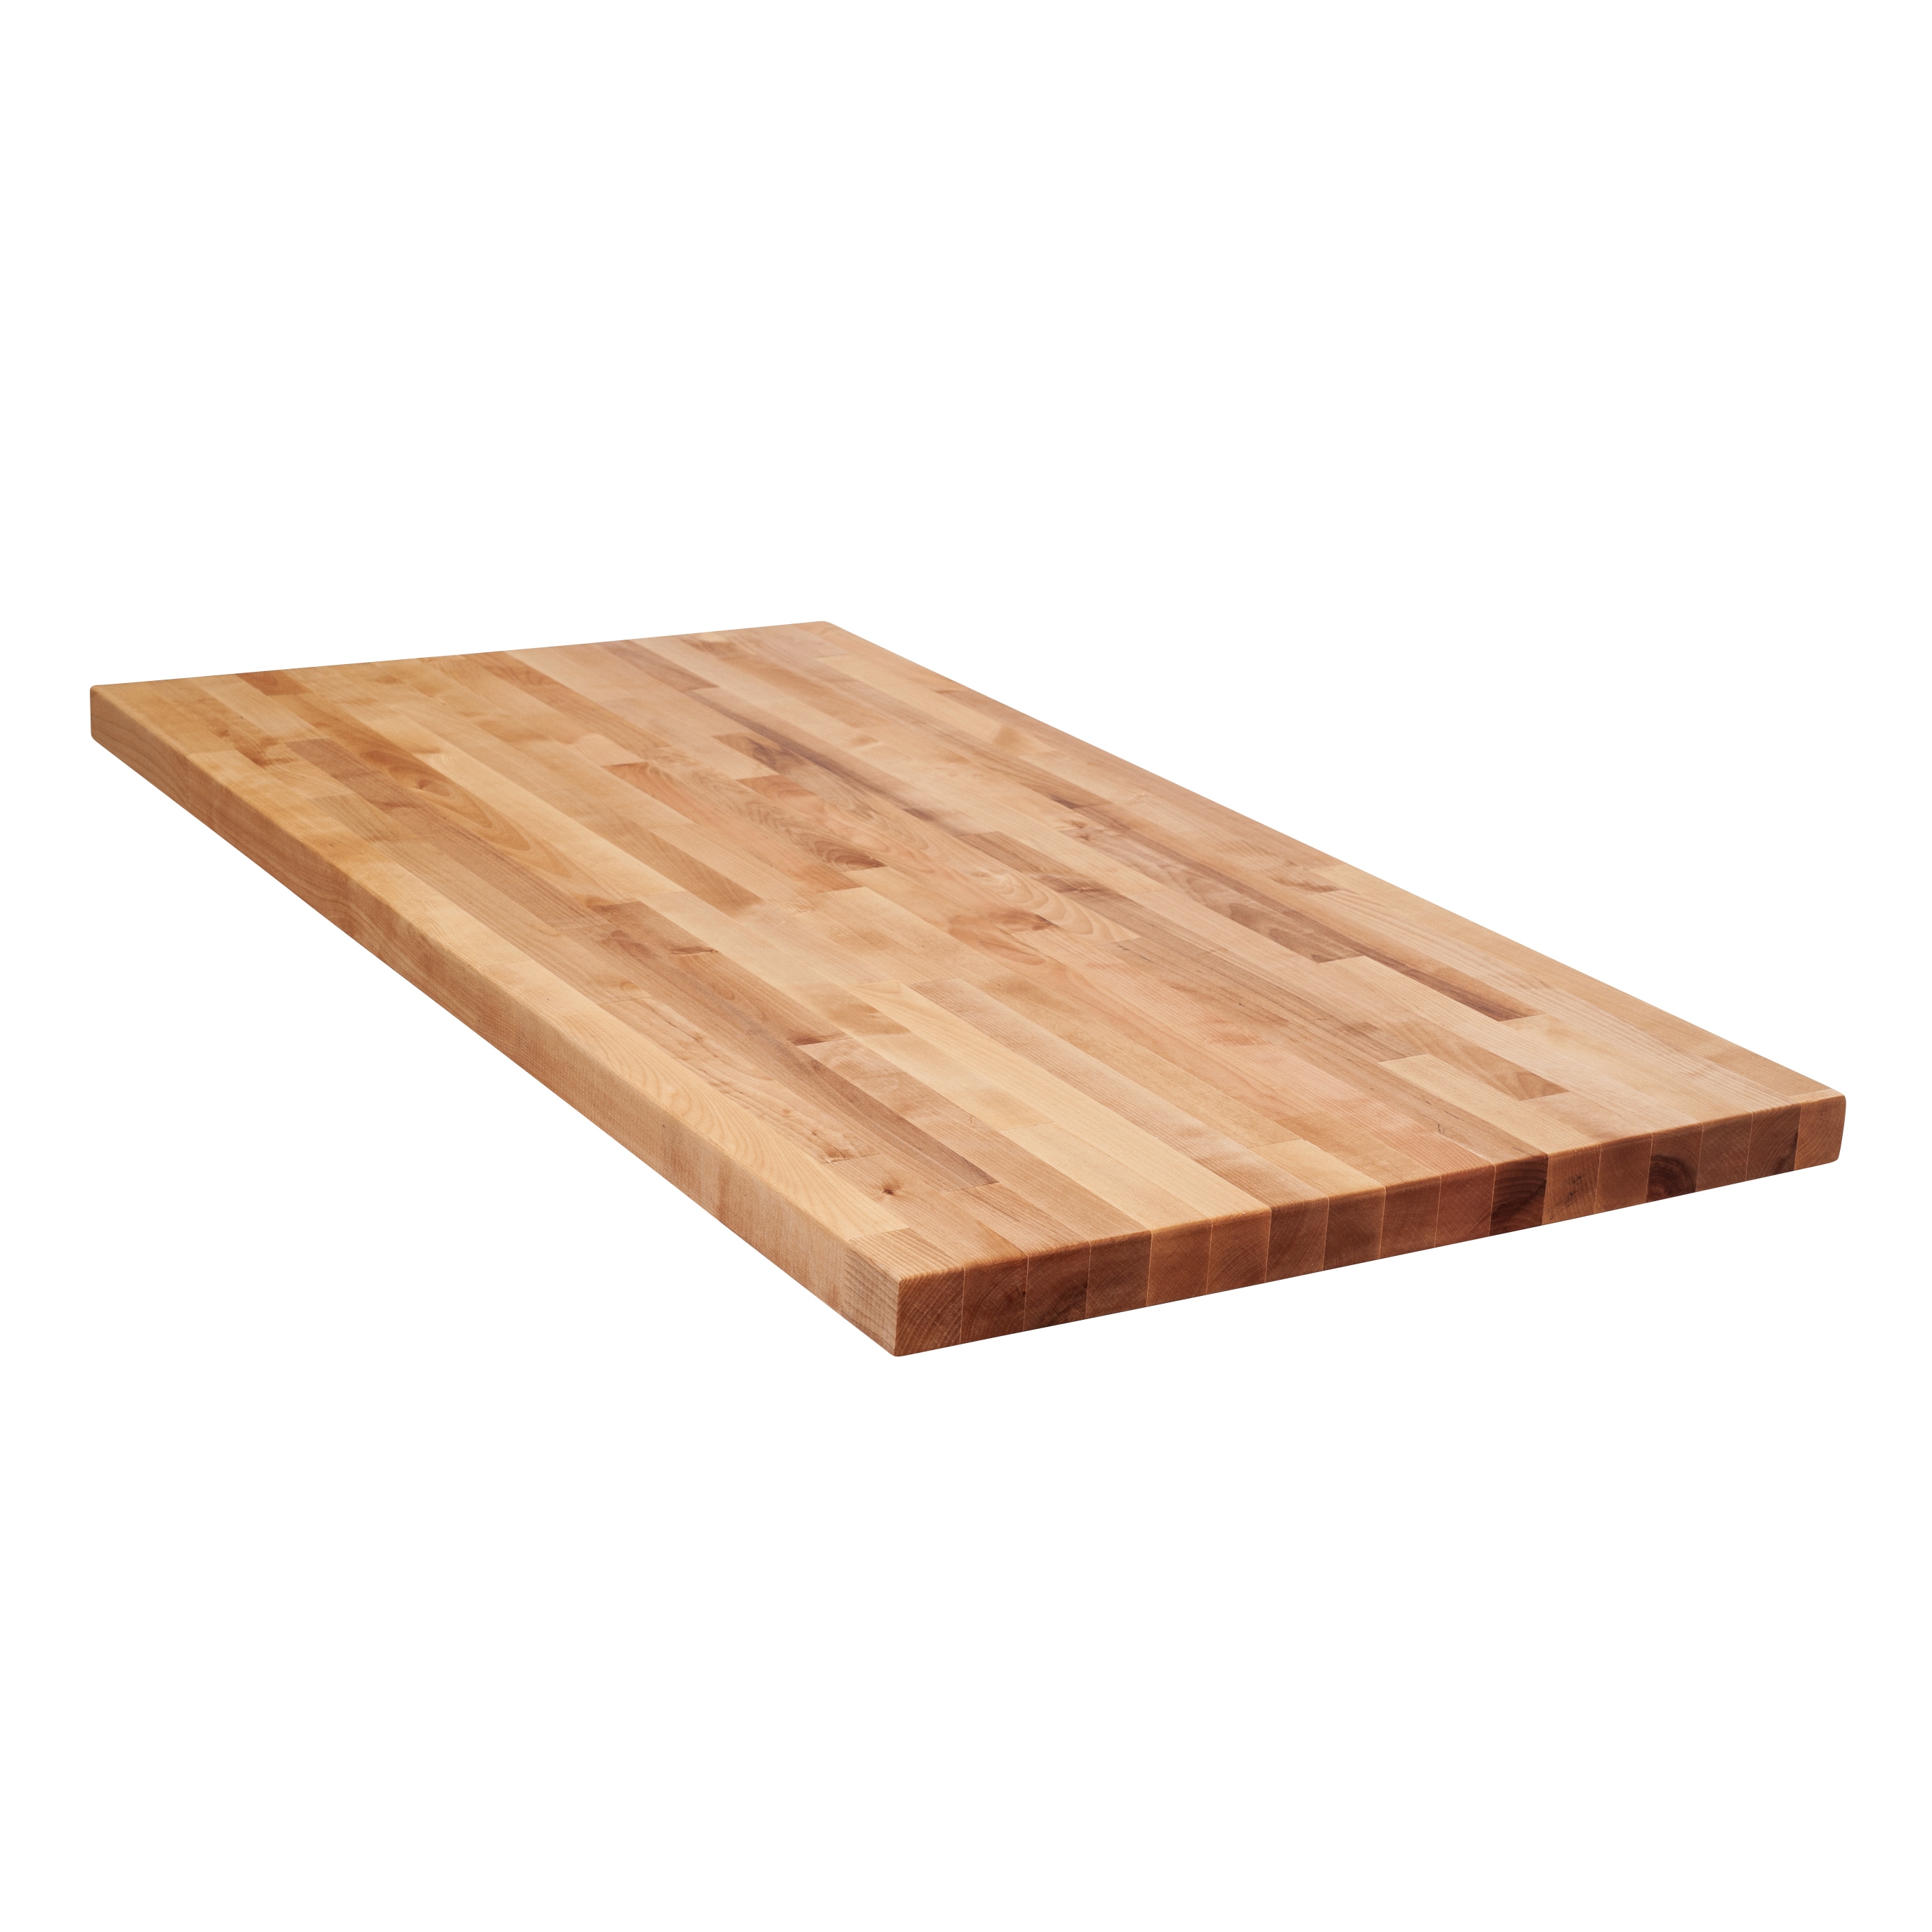 1-1/2” Unfinished Wooden Block, Solid Birch Hardwood